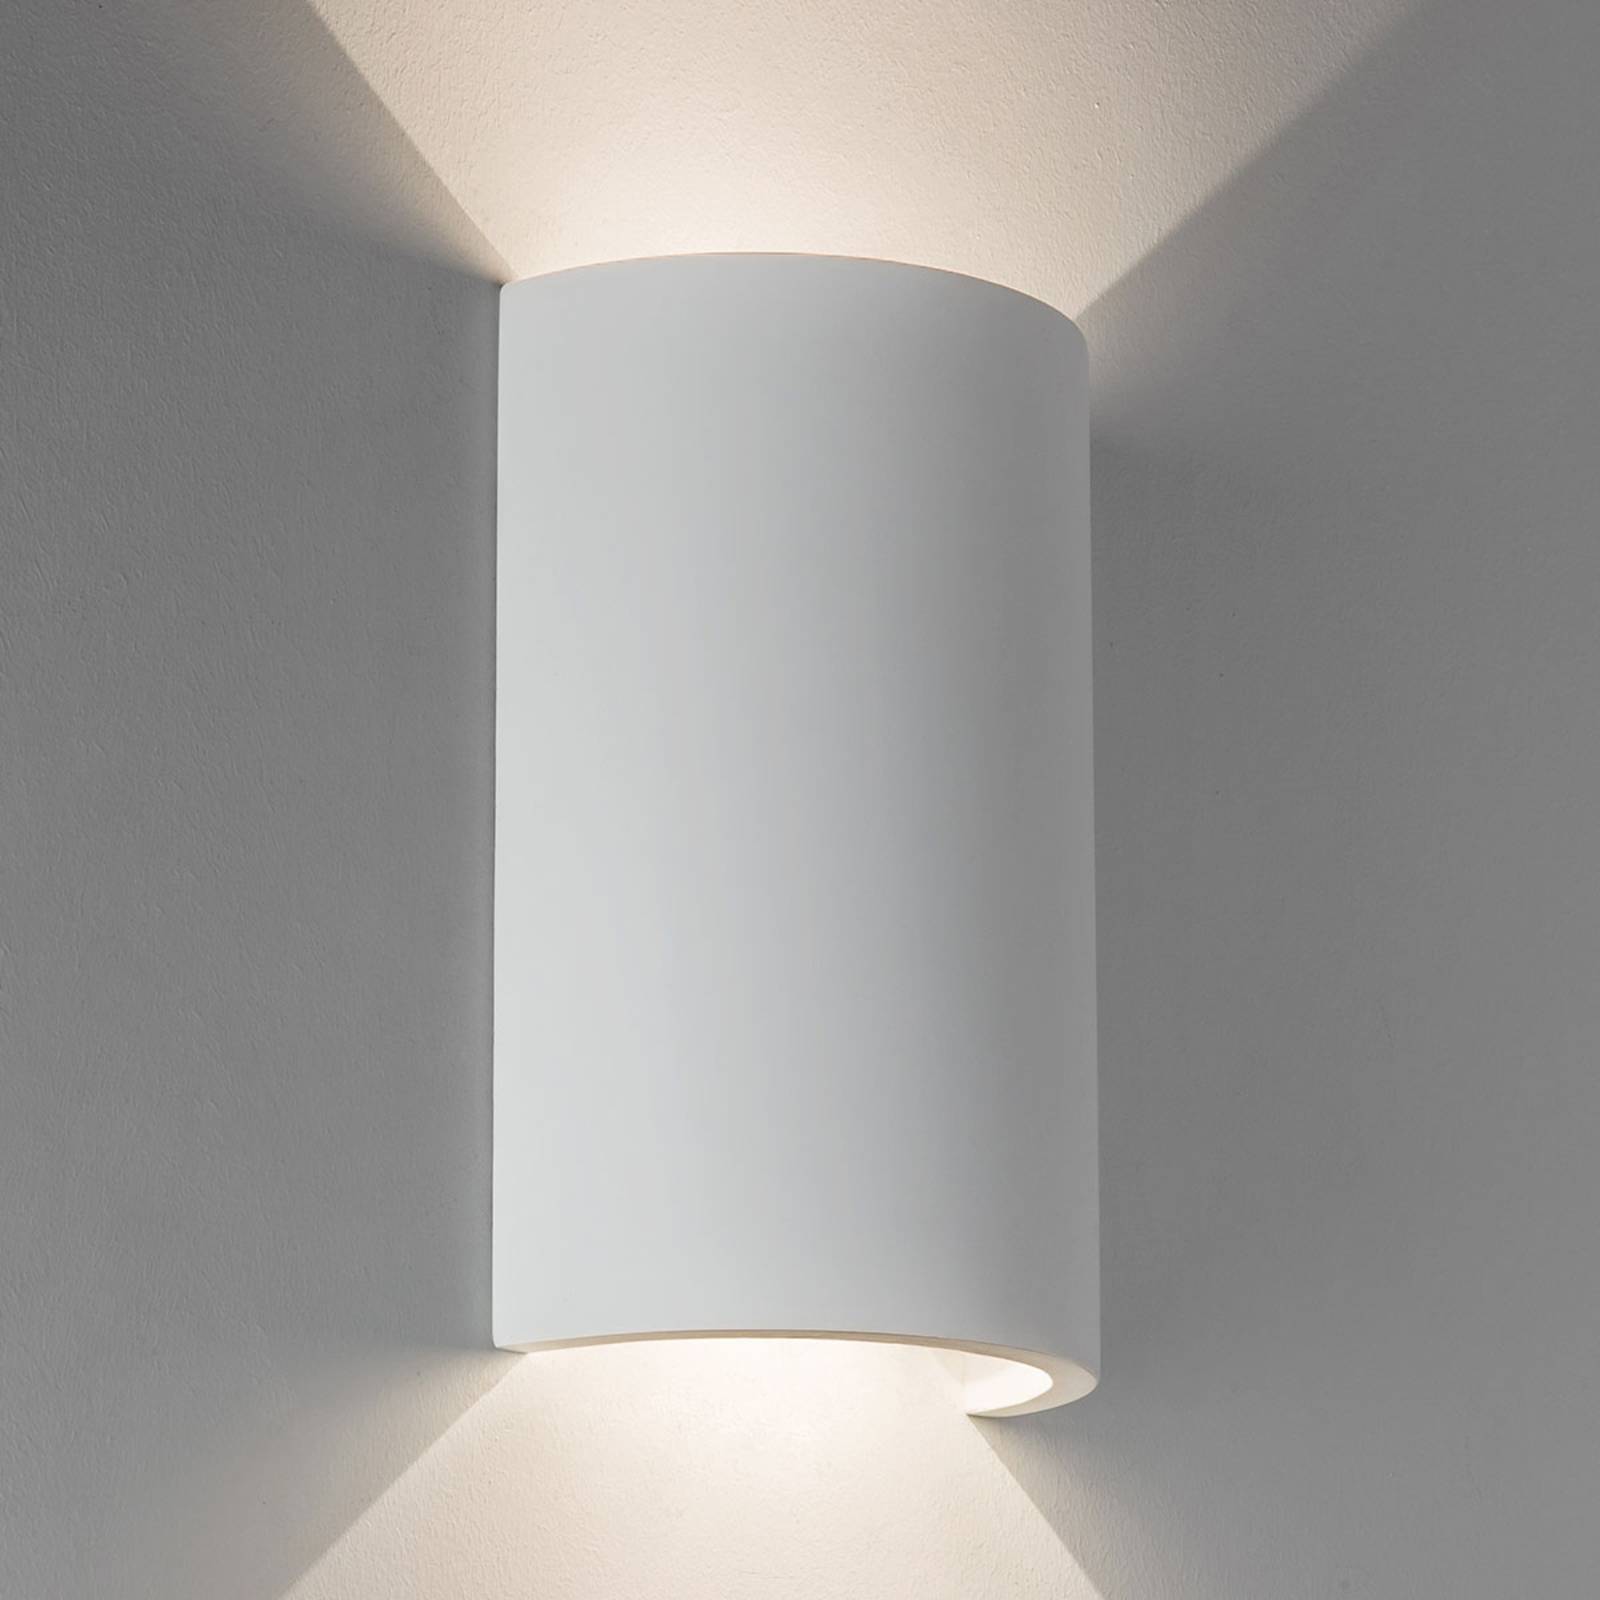 Paintable Serifos Led Wall Light 170, Moon Lamp Shade Automatica